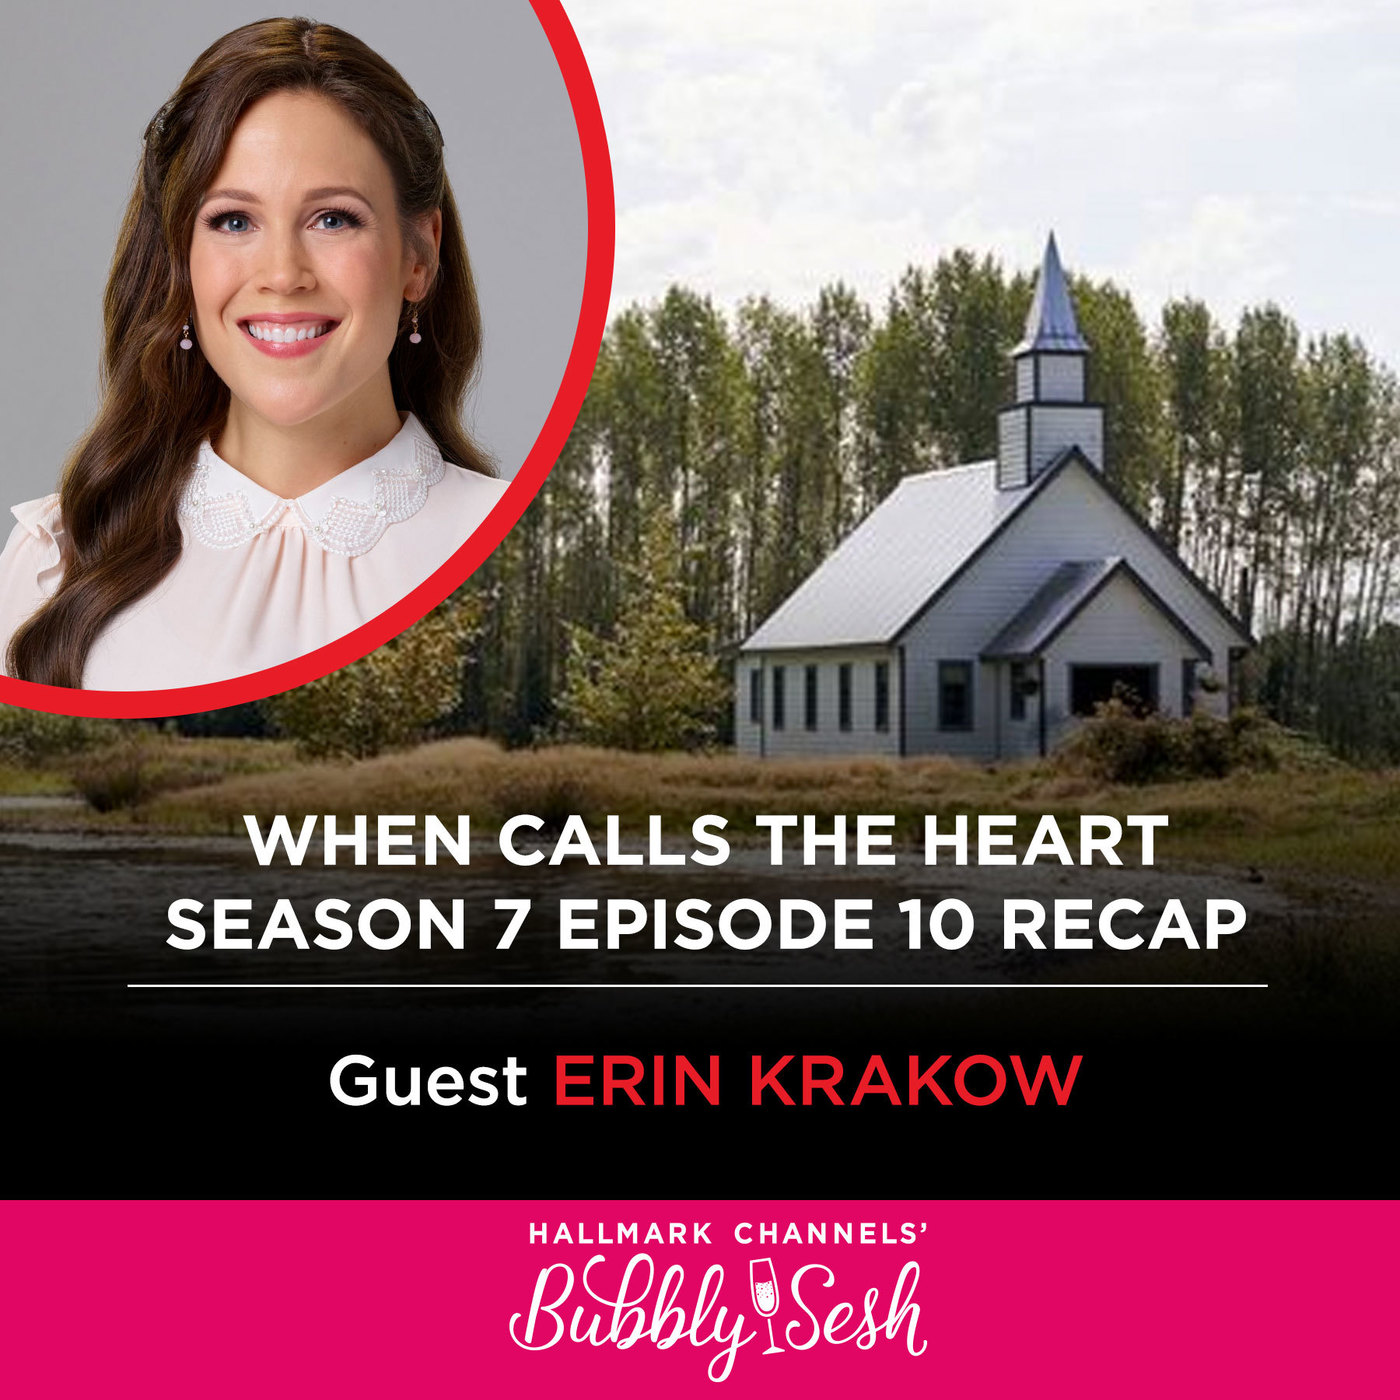 When Calls the Heart Season 7, Episode 10 Recap with Guest Erin Krakow